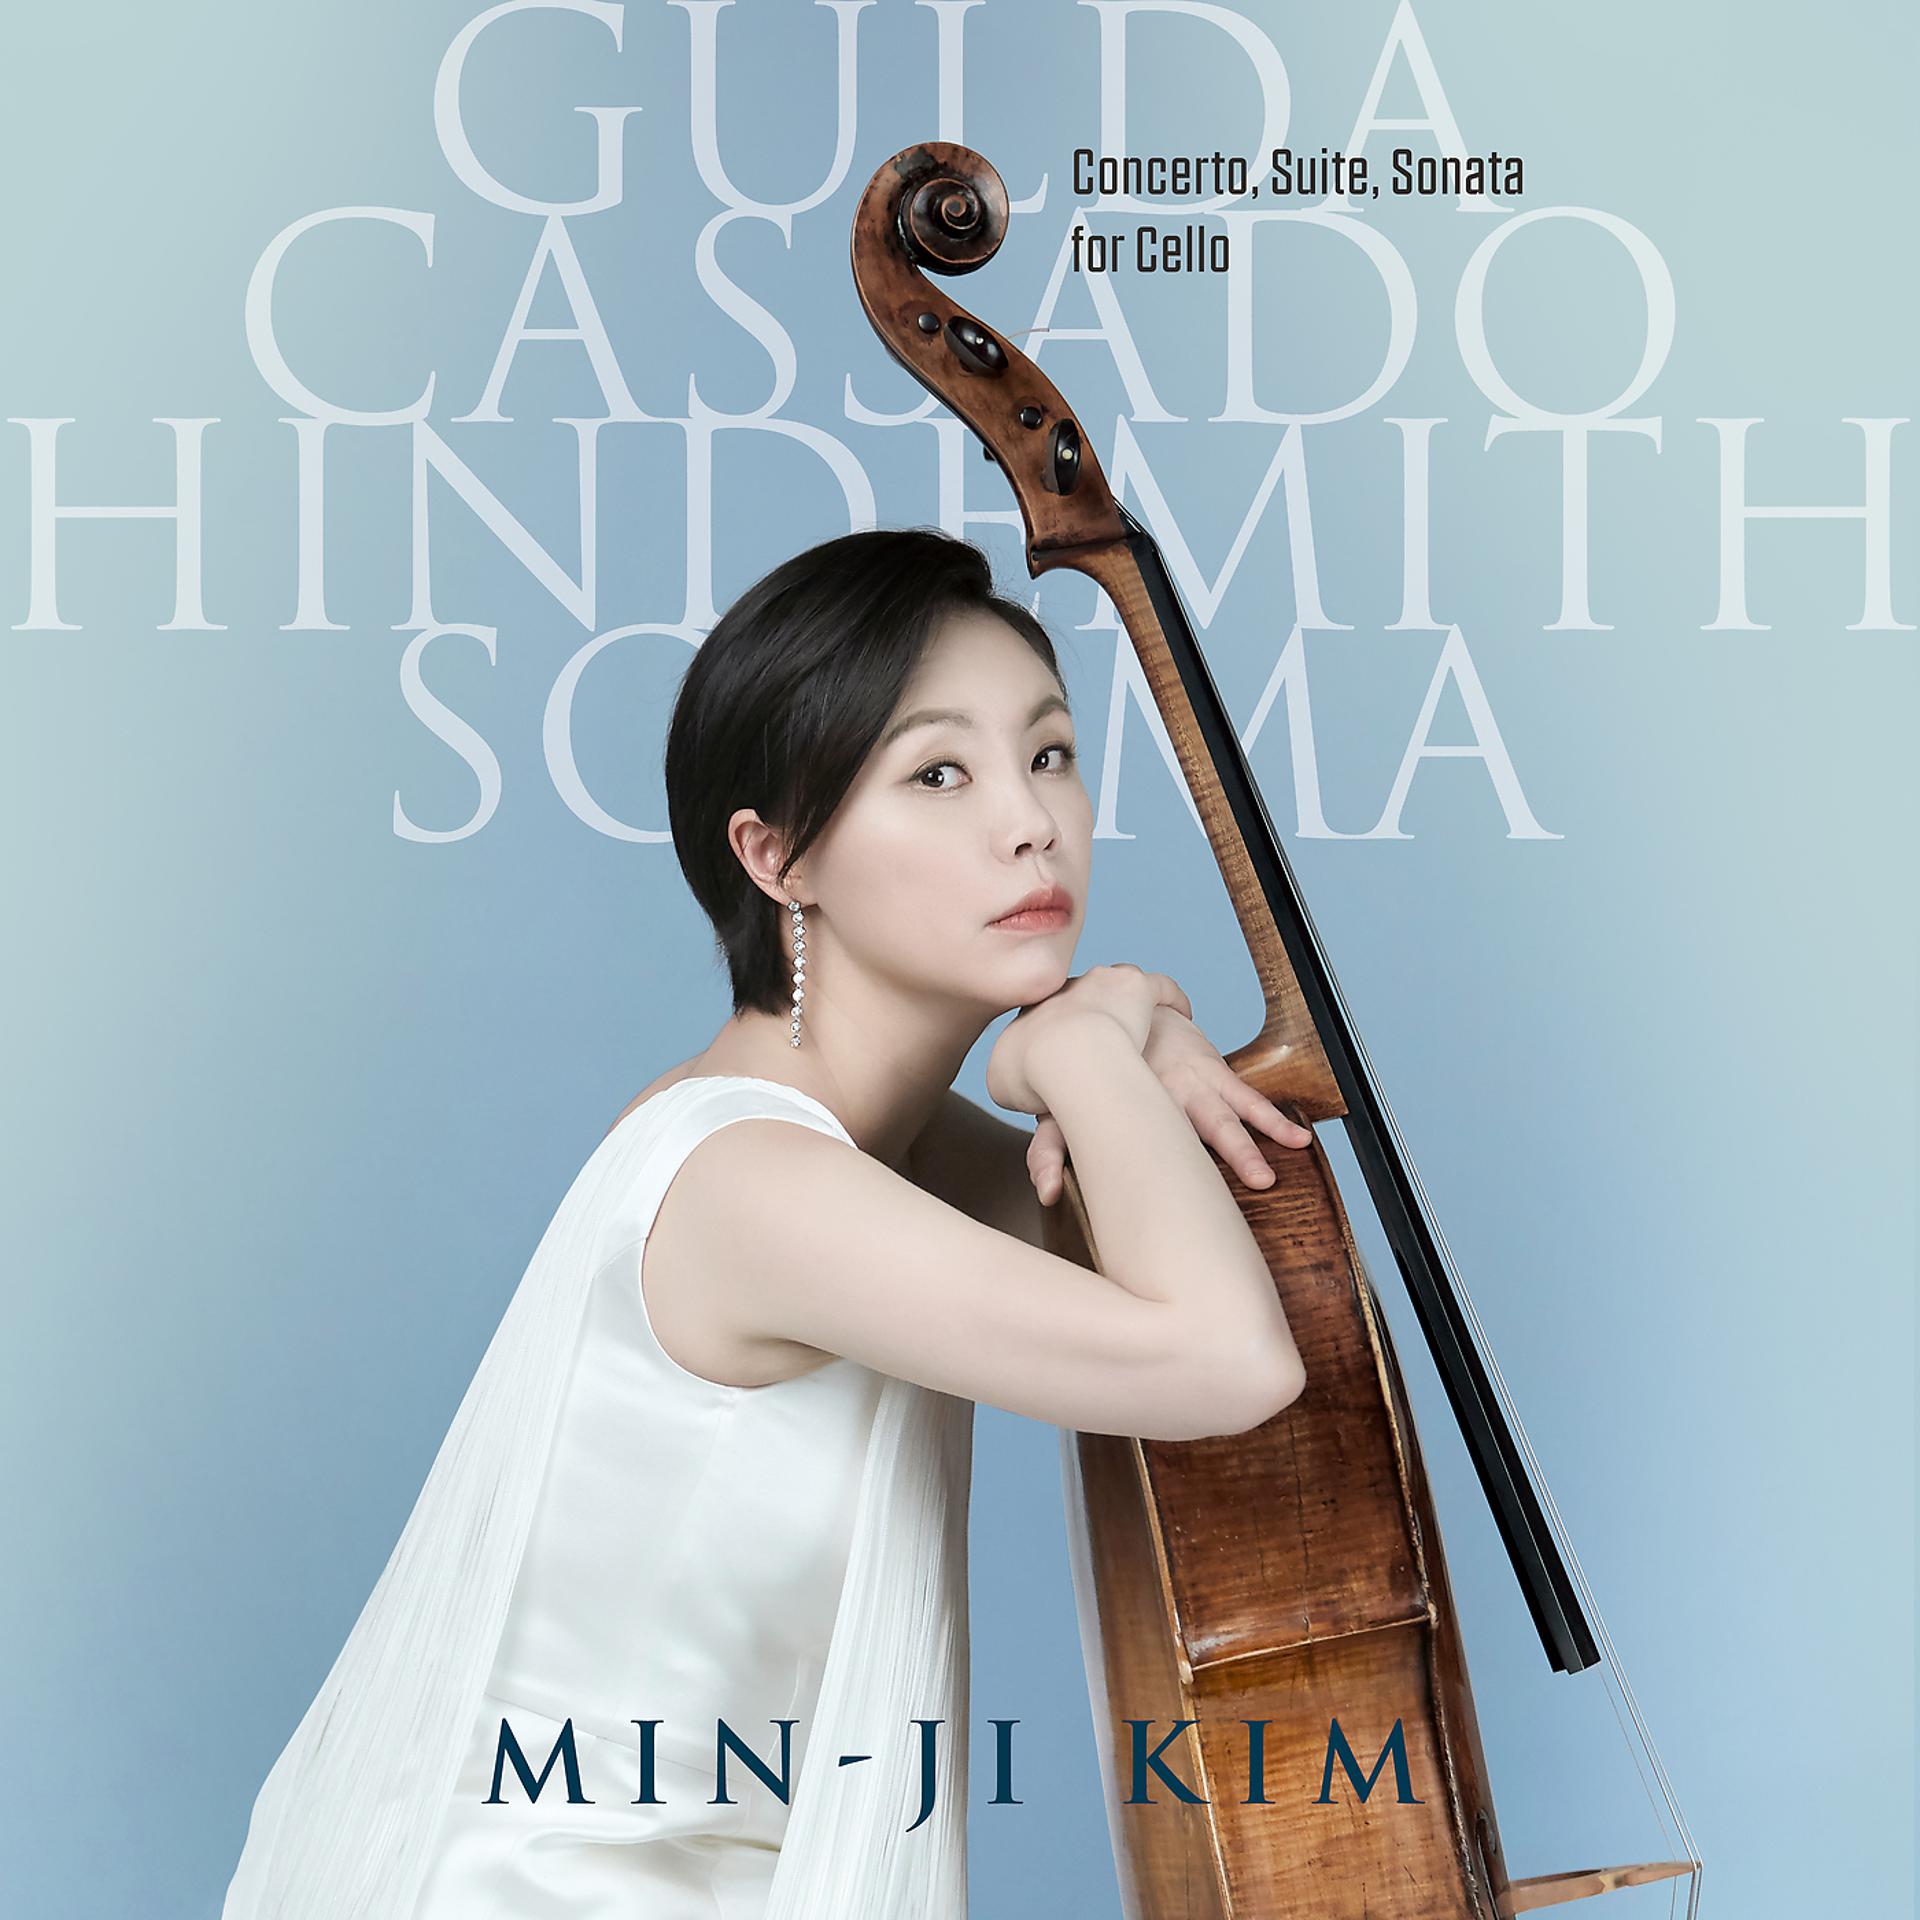 Постер альбома Gulda, Cassado, Hindemith, Solima: Concerto, Suite, Sonata for Cello